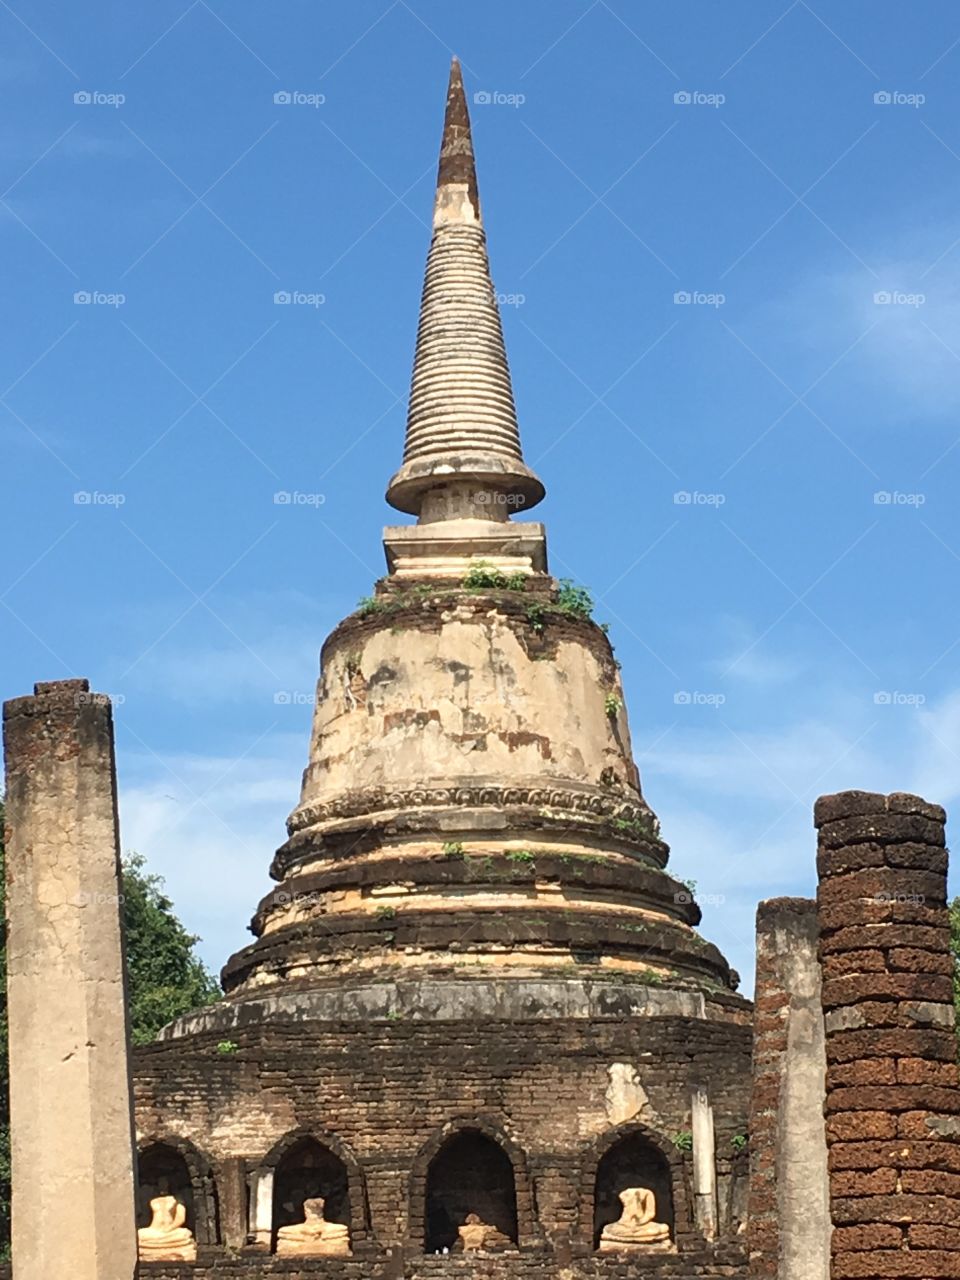 Wat chang lom elephant pagoda temple in Sukhothai, Thailand 